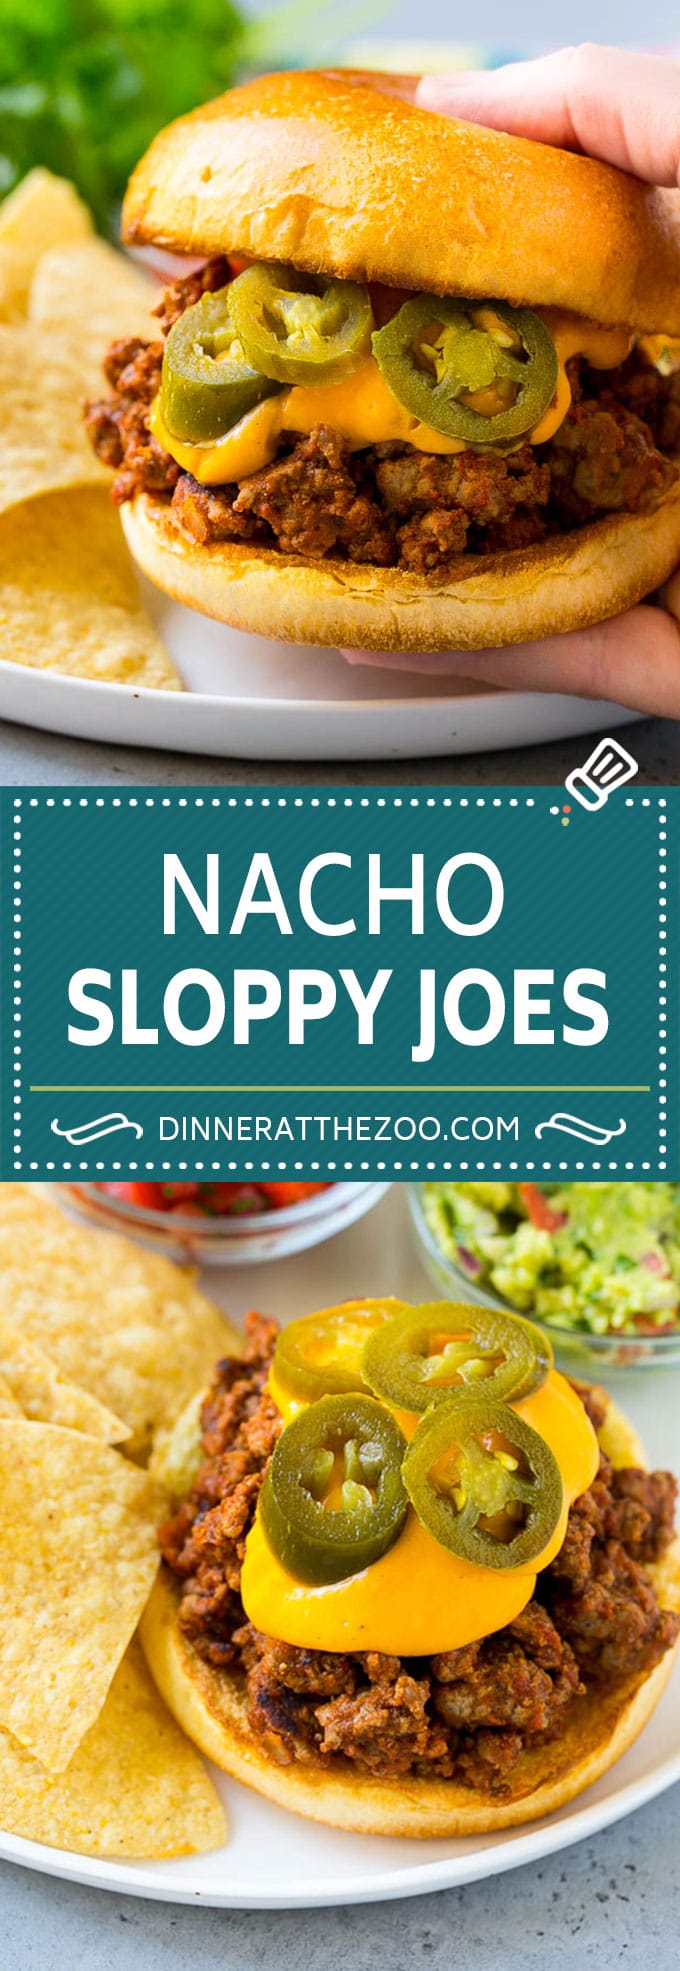 Nacho Sloppy Joes Recipe | Ground Beef Recipe | Easy Sloppy Joes #beef #nachos #cheese #spicy #sandwich #dinner #dinneratthezoo